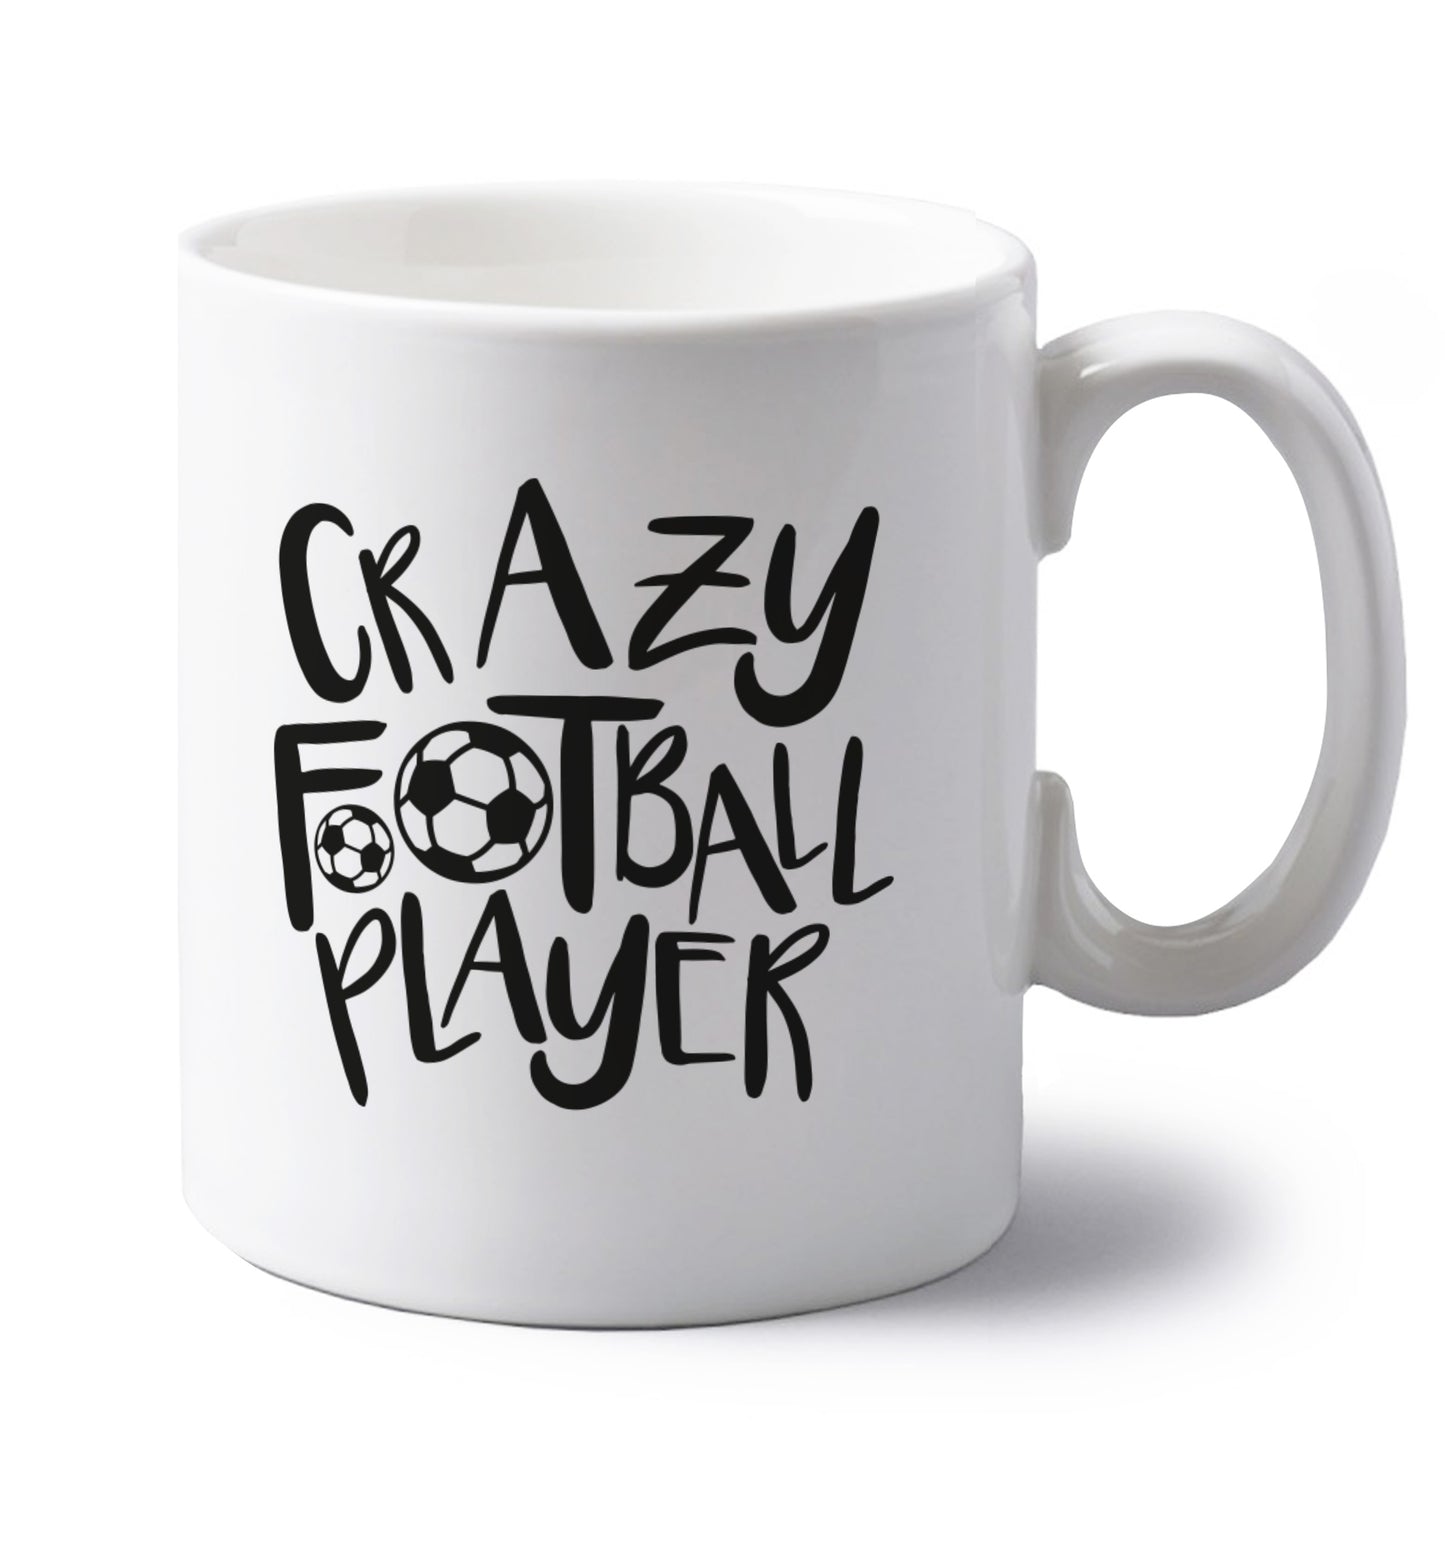 Crazy football player left handed white ceramic mug 